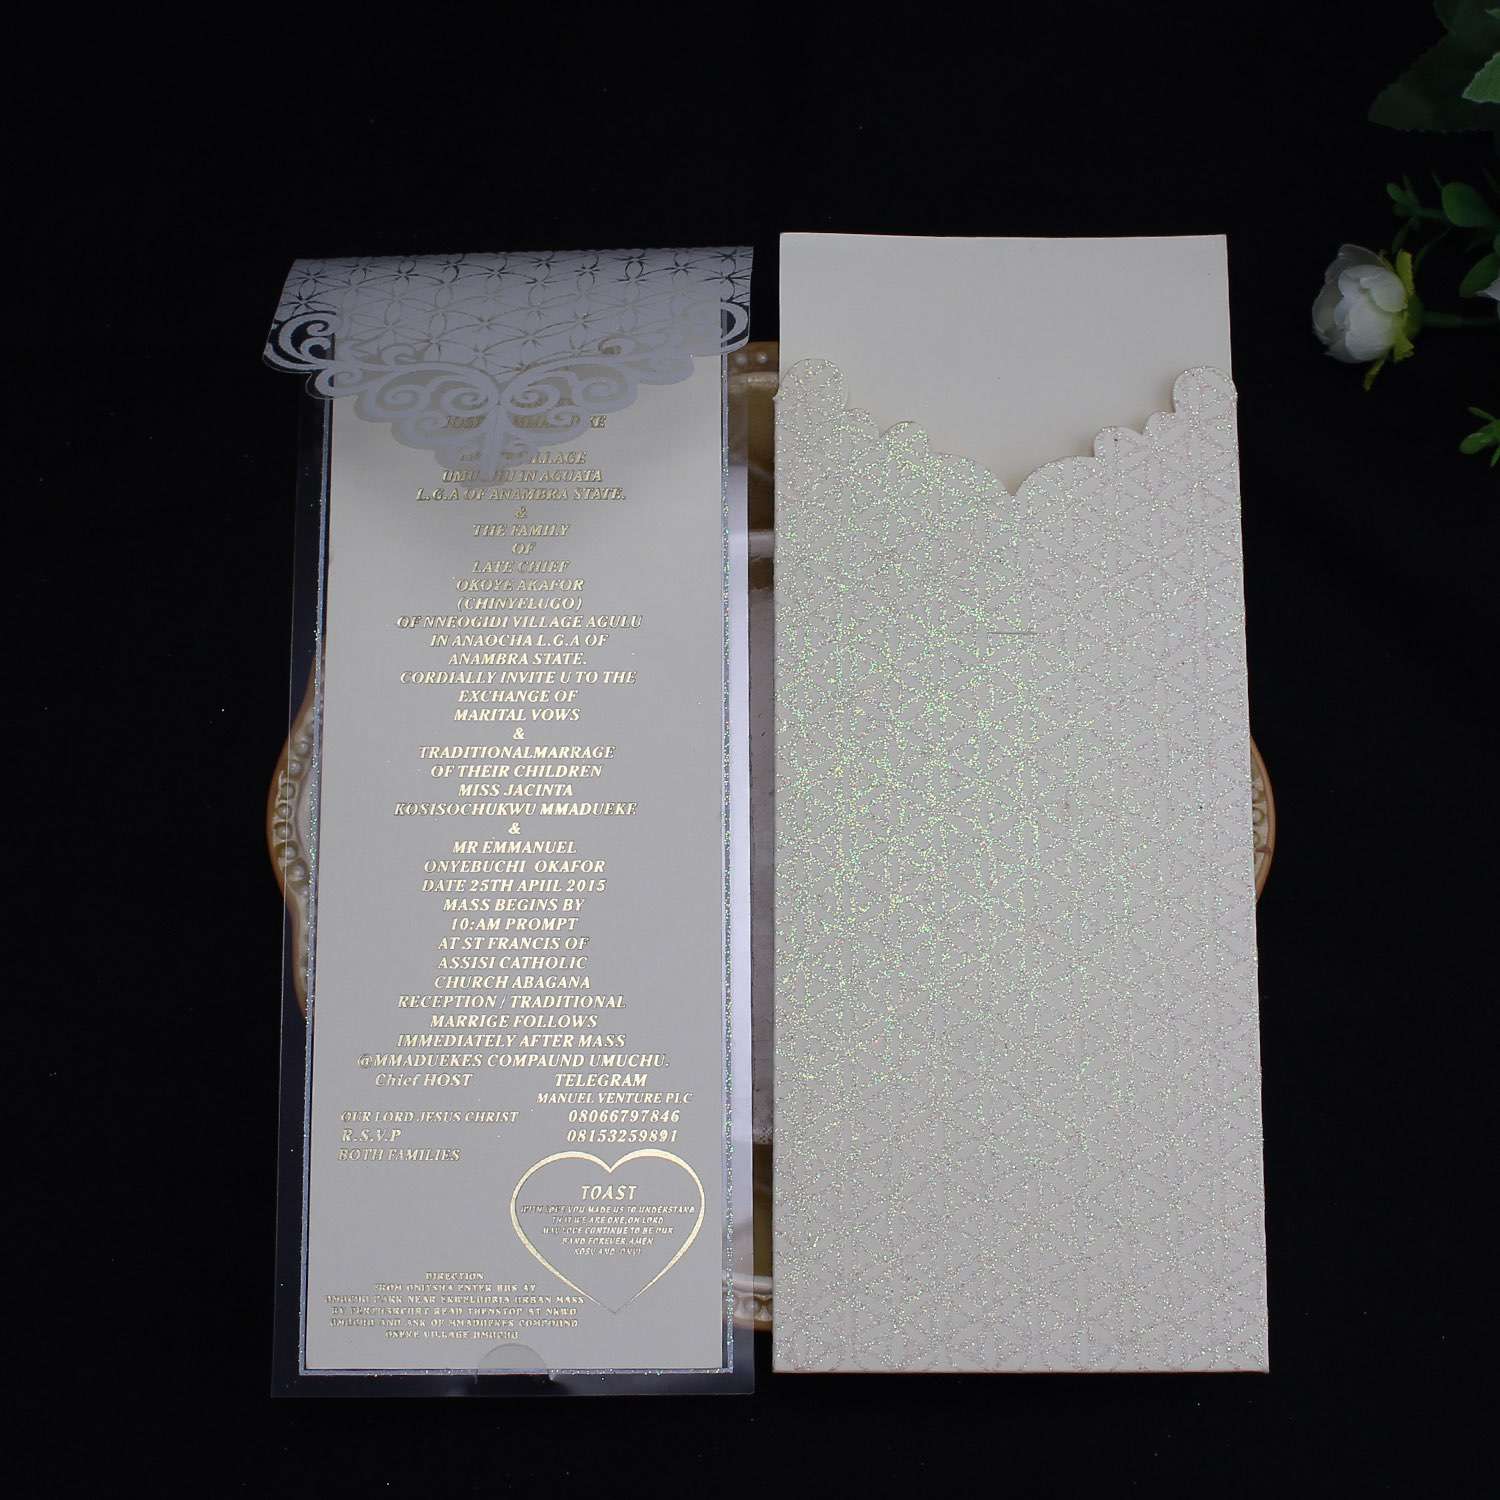 Glitter Pocket Invitation Foiling Greeting Card Customized 